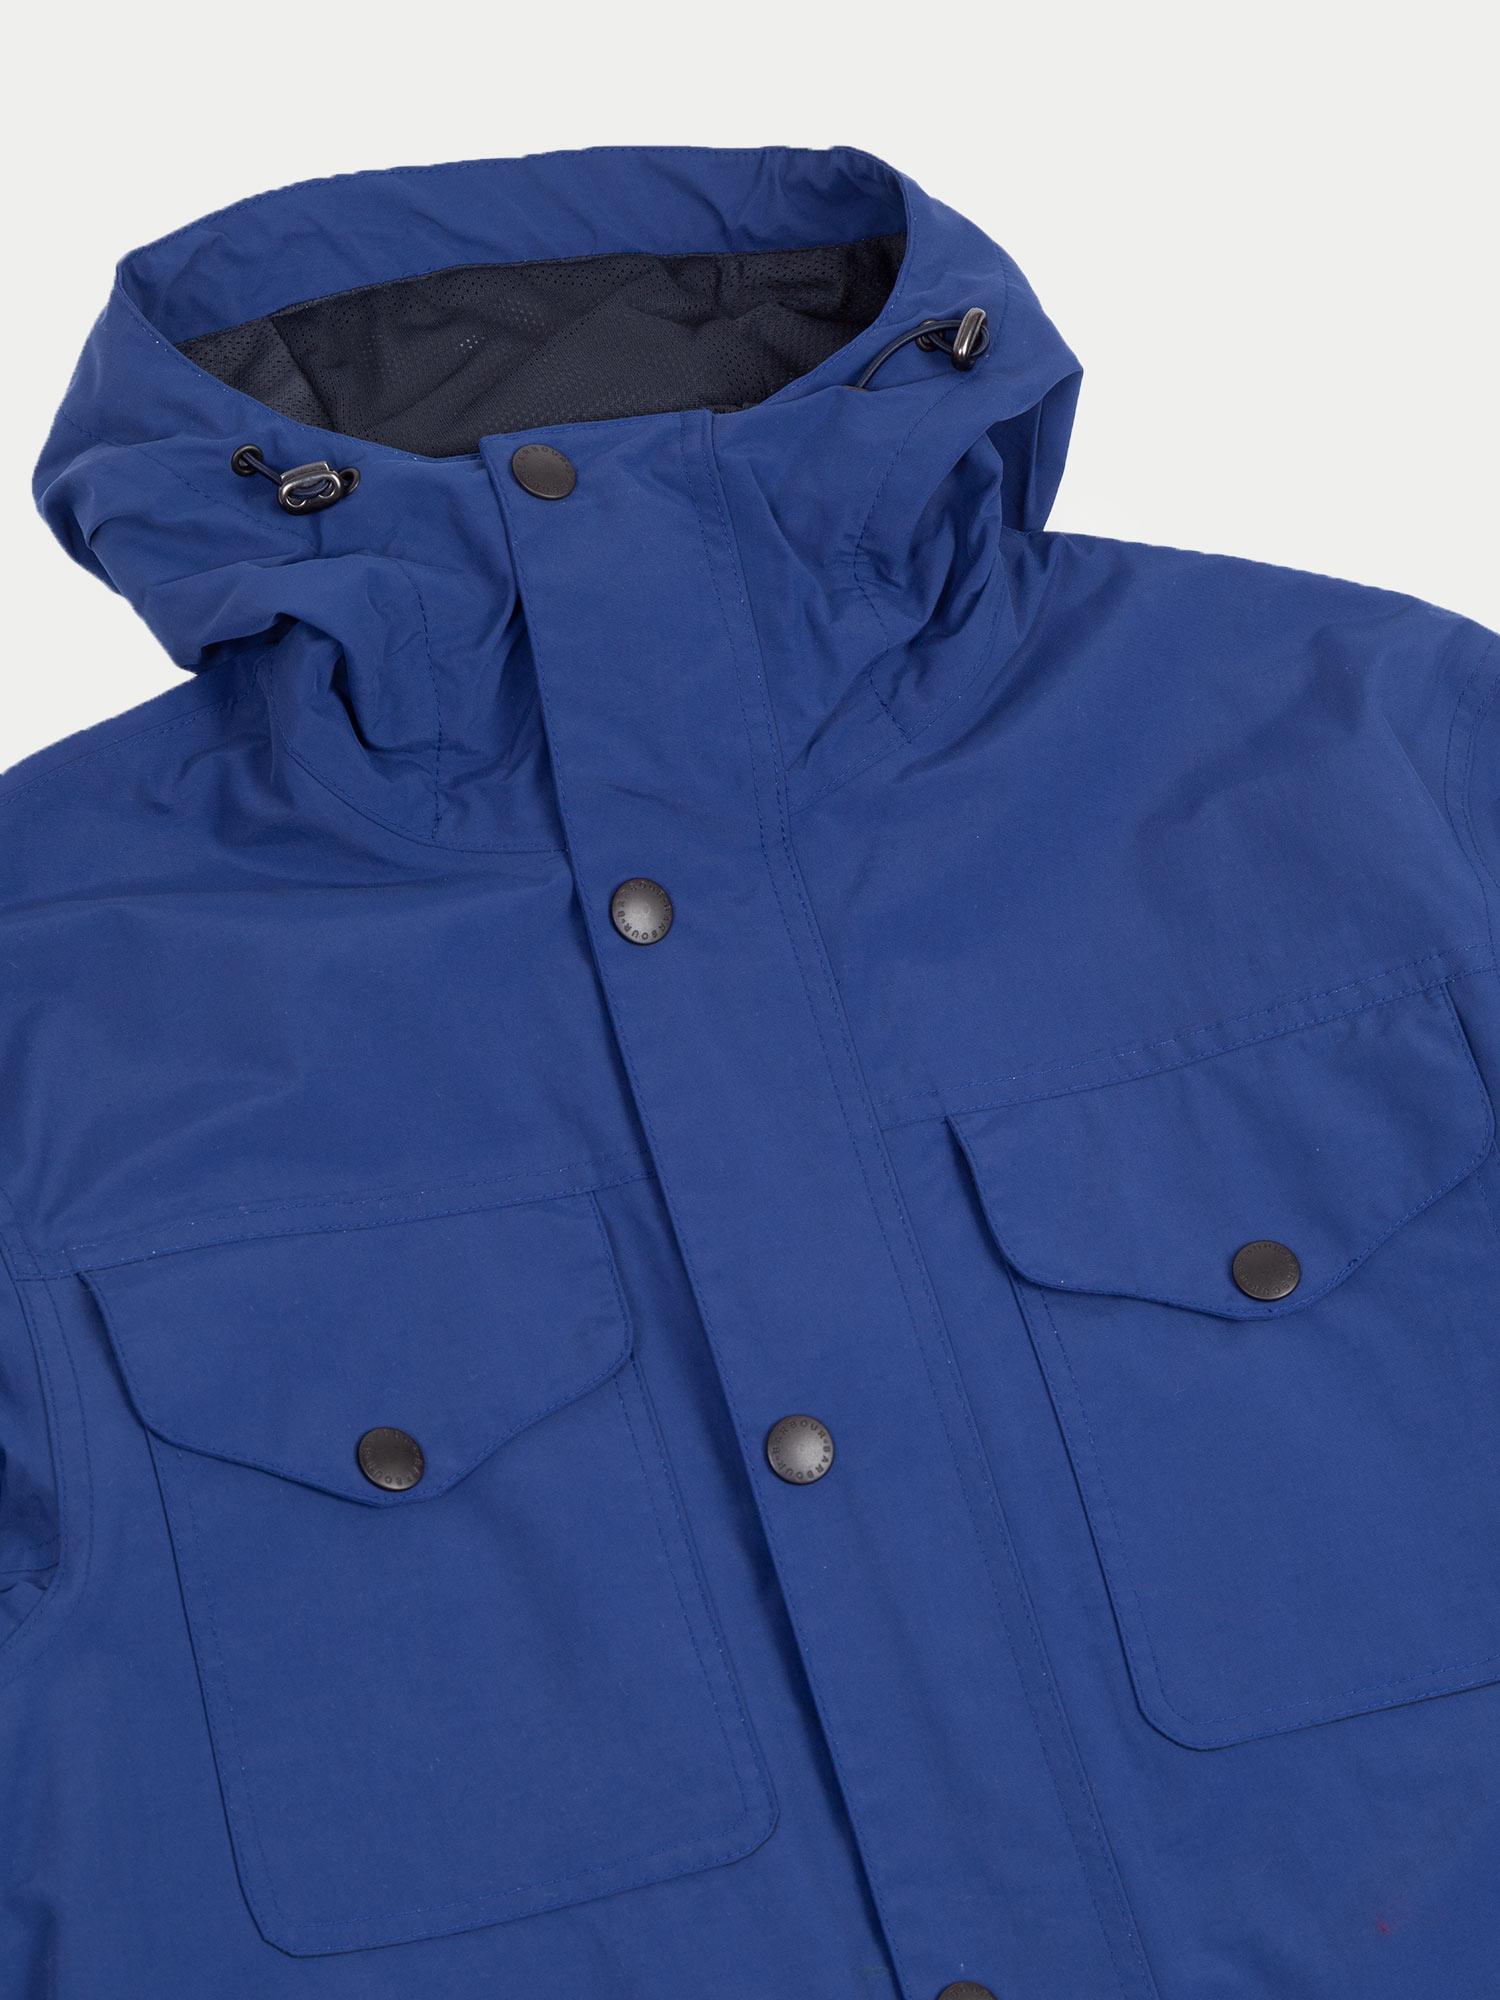 barbour richmond waterproof breathable jacket